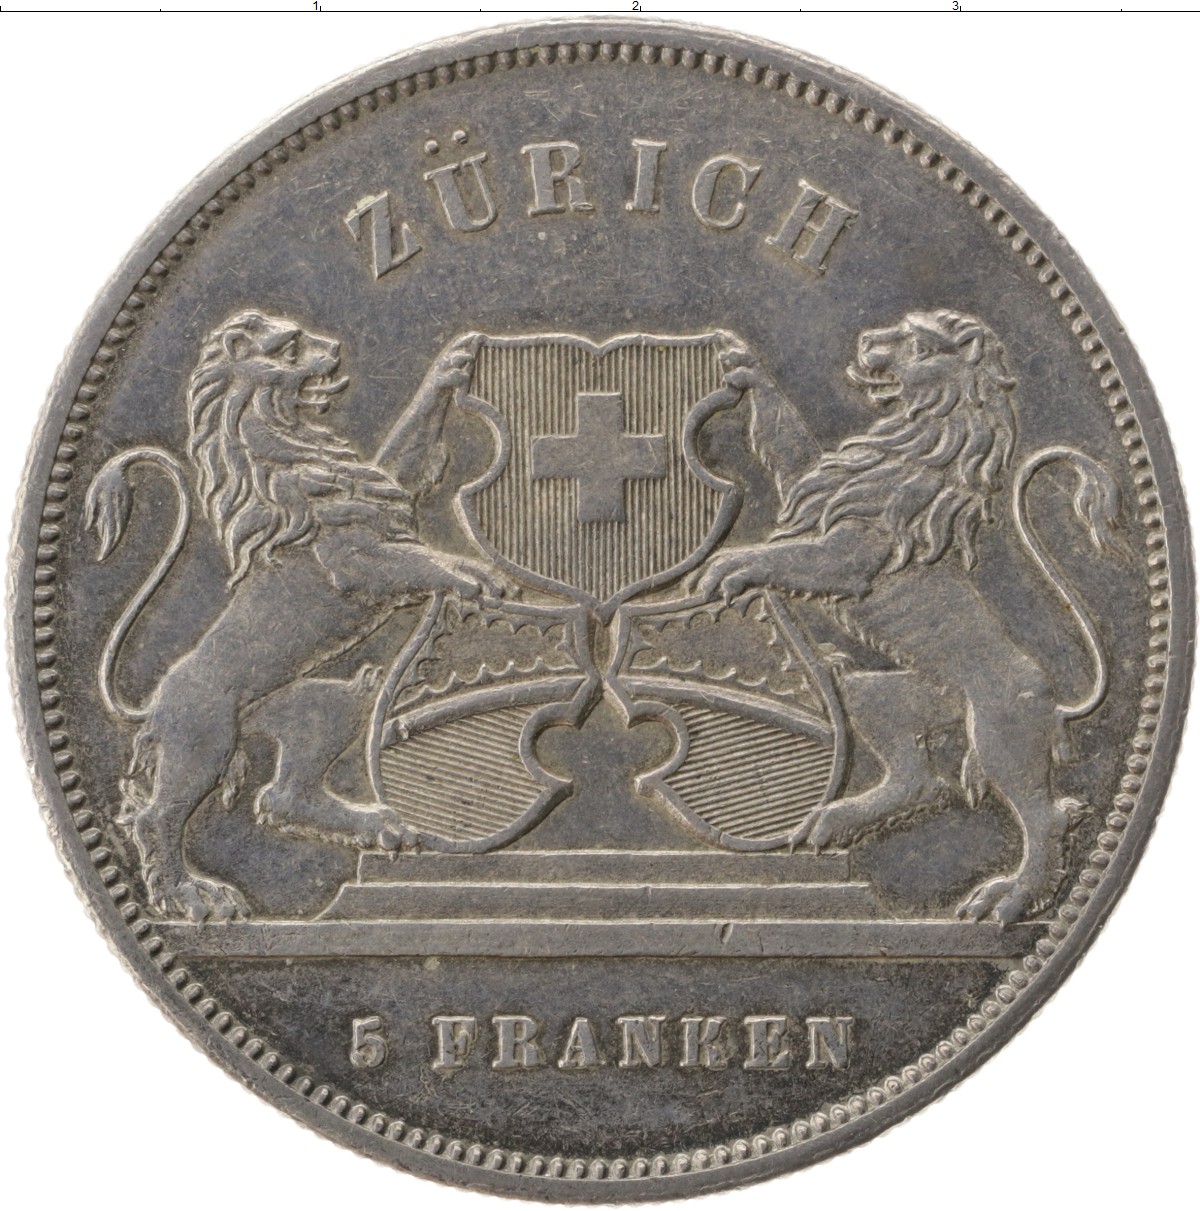 Монеты швейцарии каталог